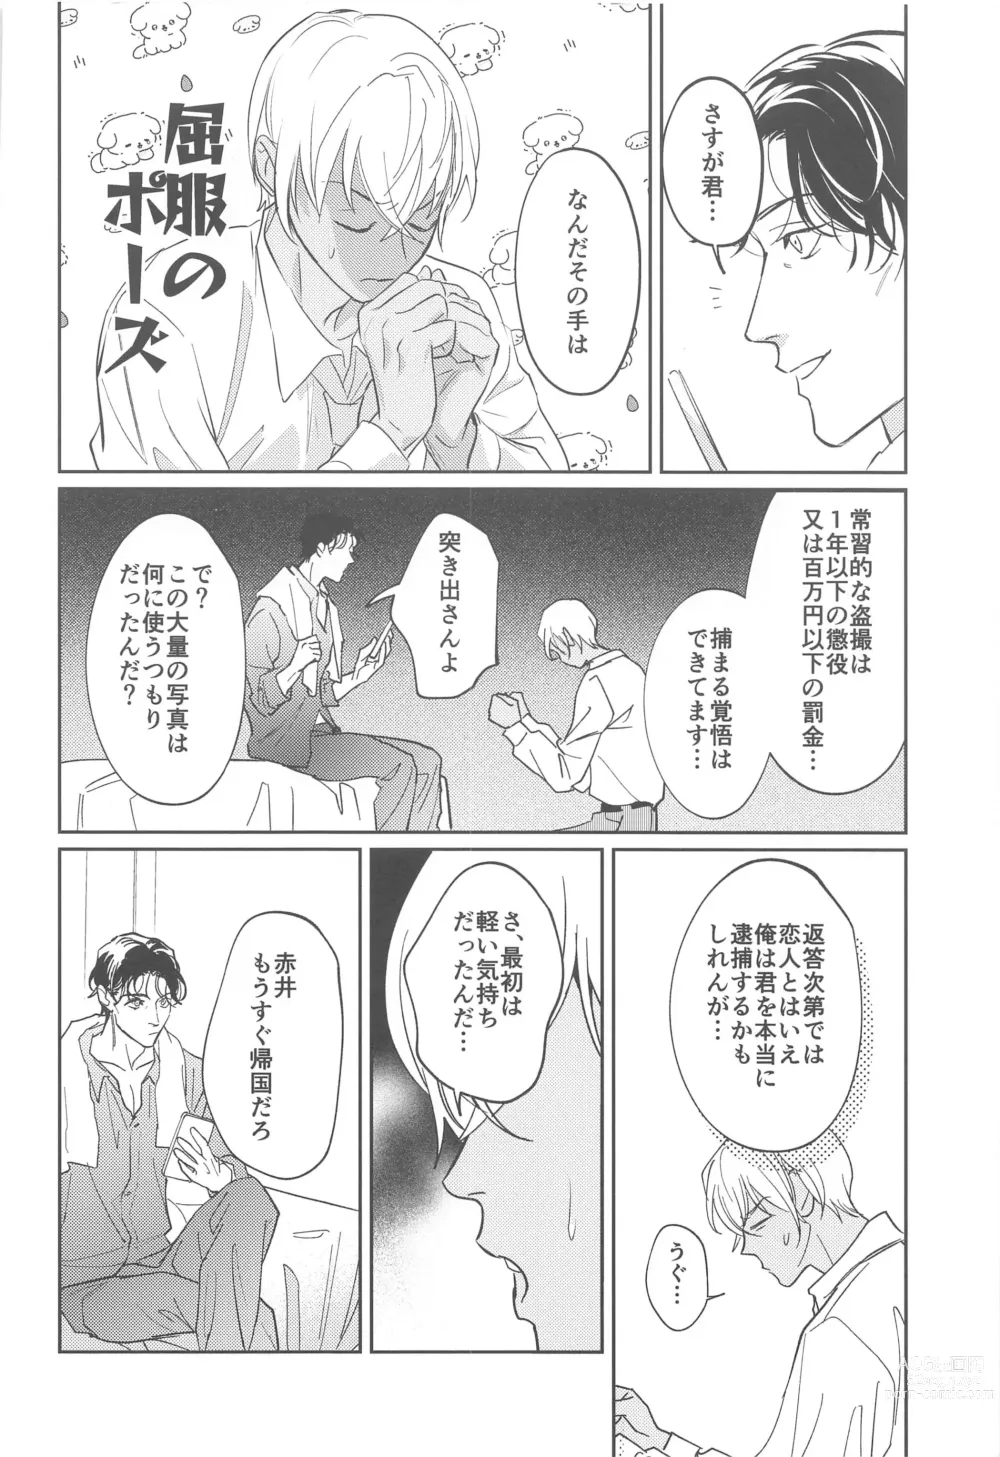 Page 9 of doujinshi REC